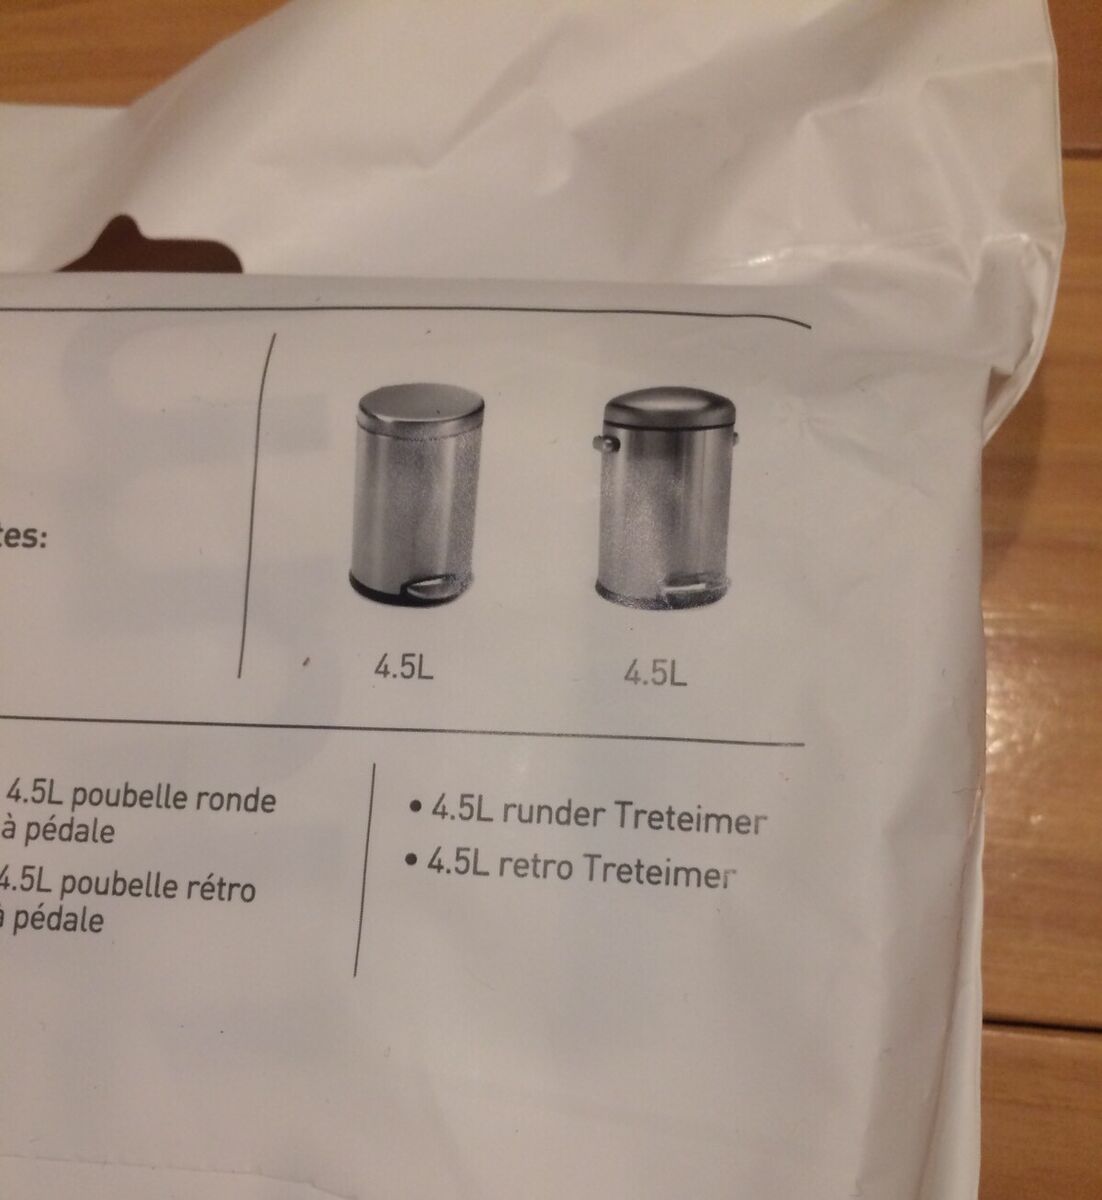 Code Q 20 Ct SIMPLEHUMAN Custom Fit Trash Bags Can Liners Refill